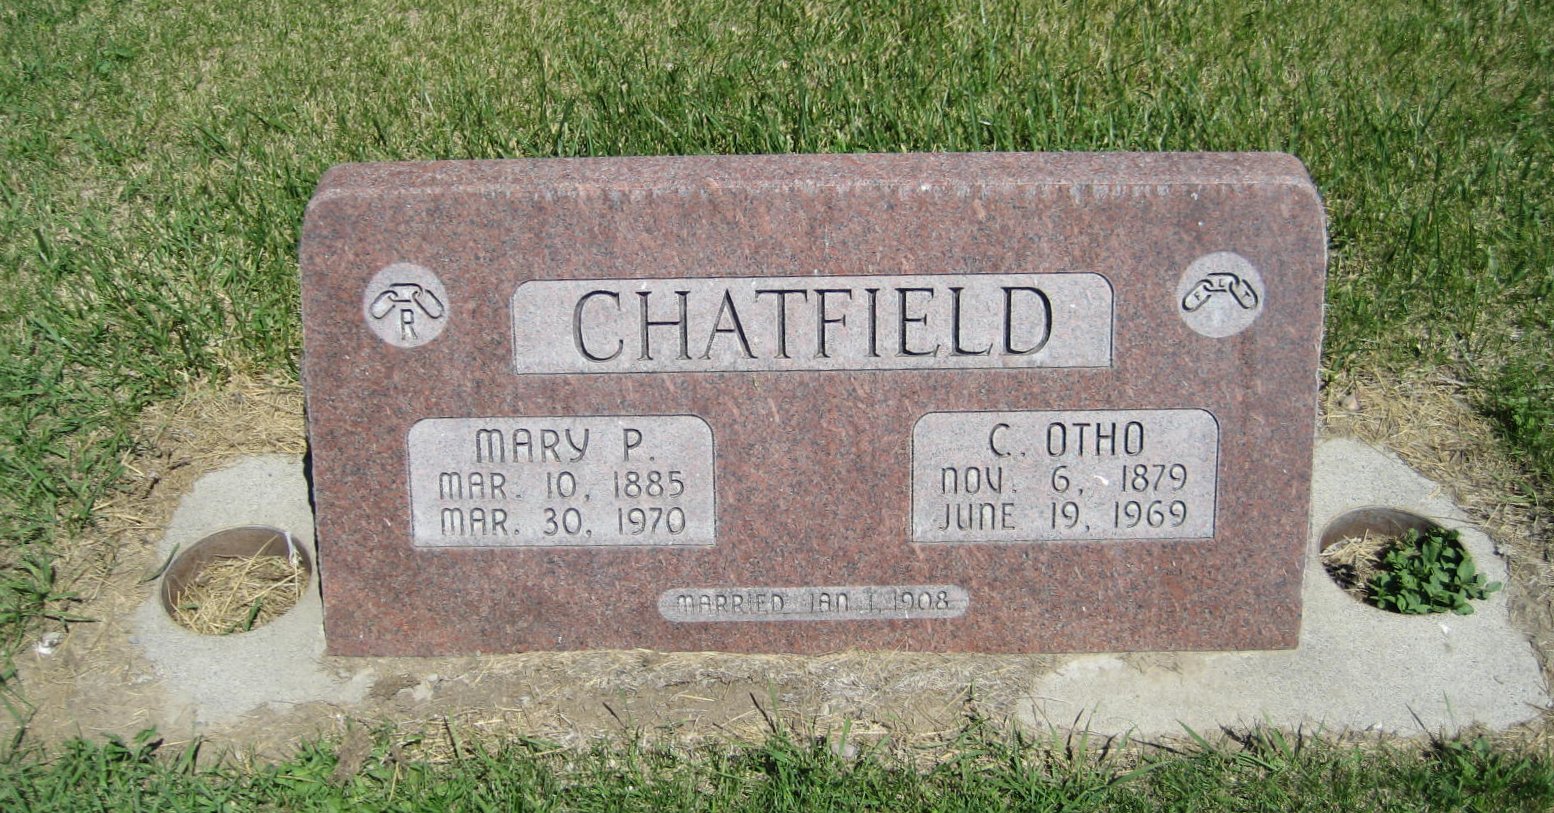 CHATFIELD Christopher Otho 1879-1969 grave.jpg